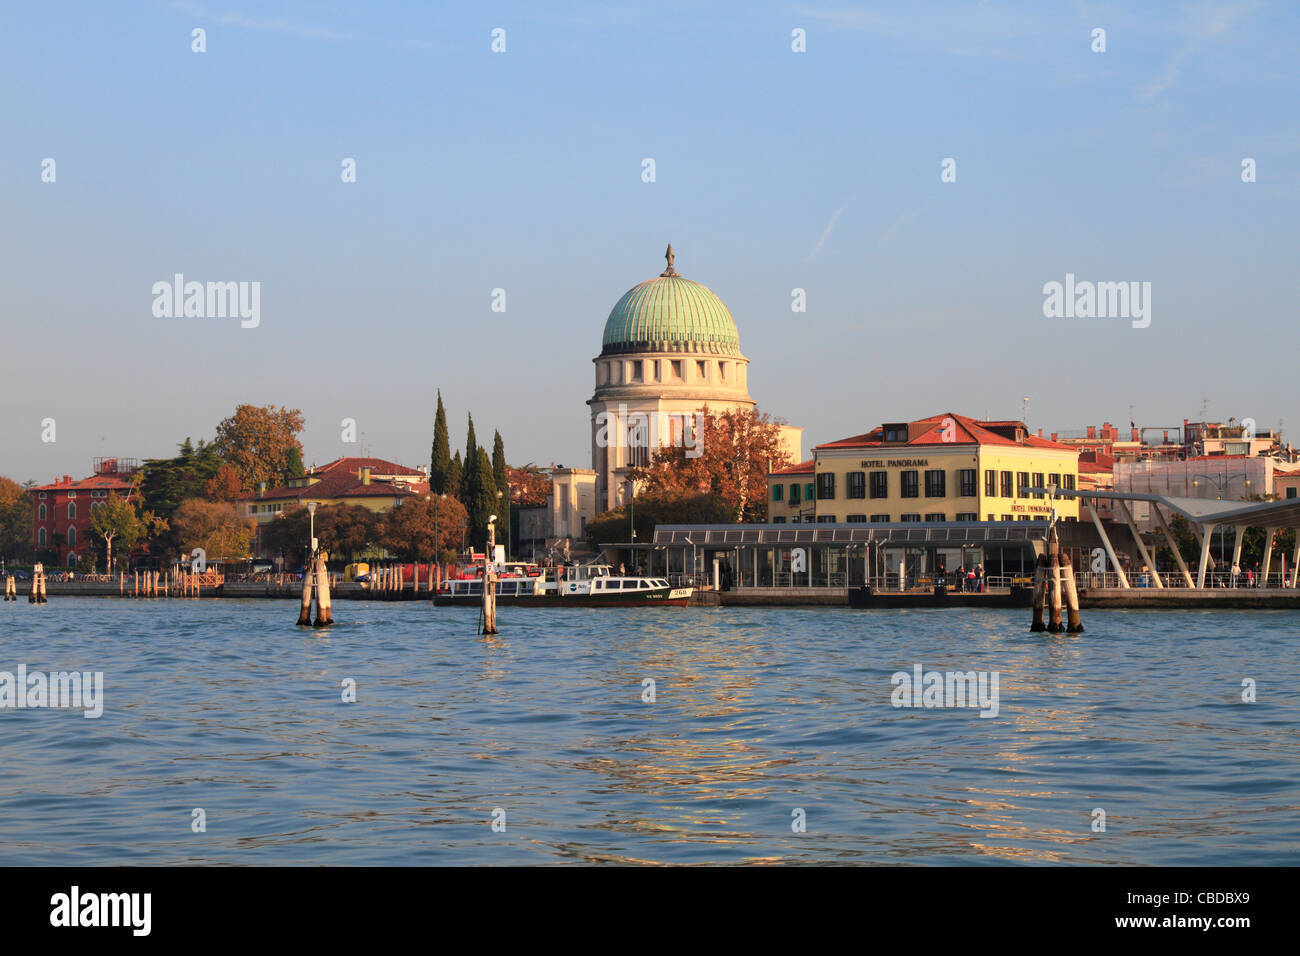 Lido vaporetto Actv boat Station, Panorama Hotel and Santa Maria Elisabetta Church, Venice, Italy, Europe. Stock Photo